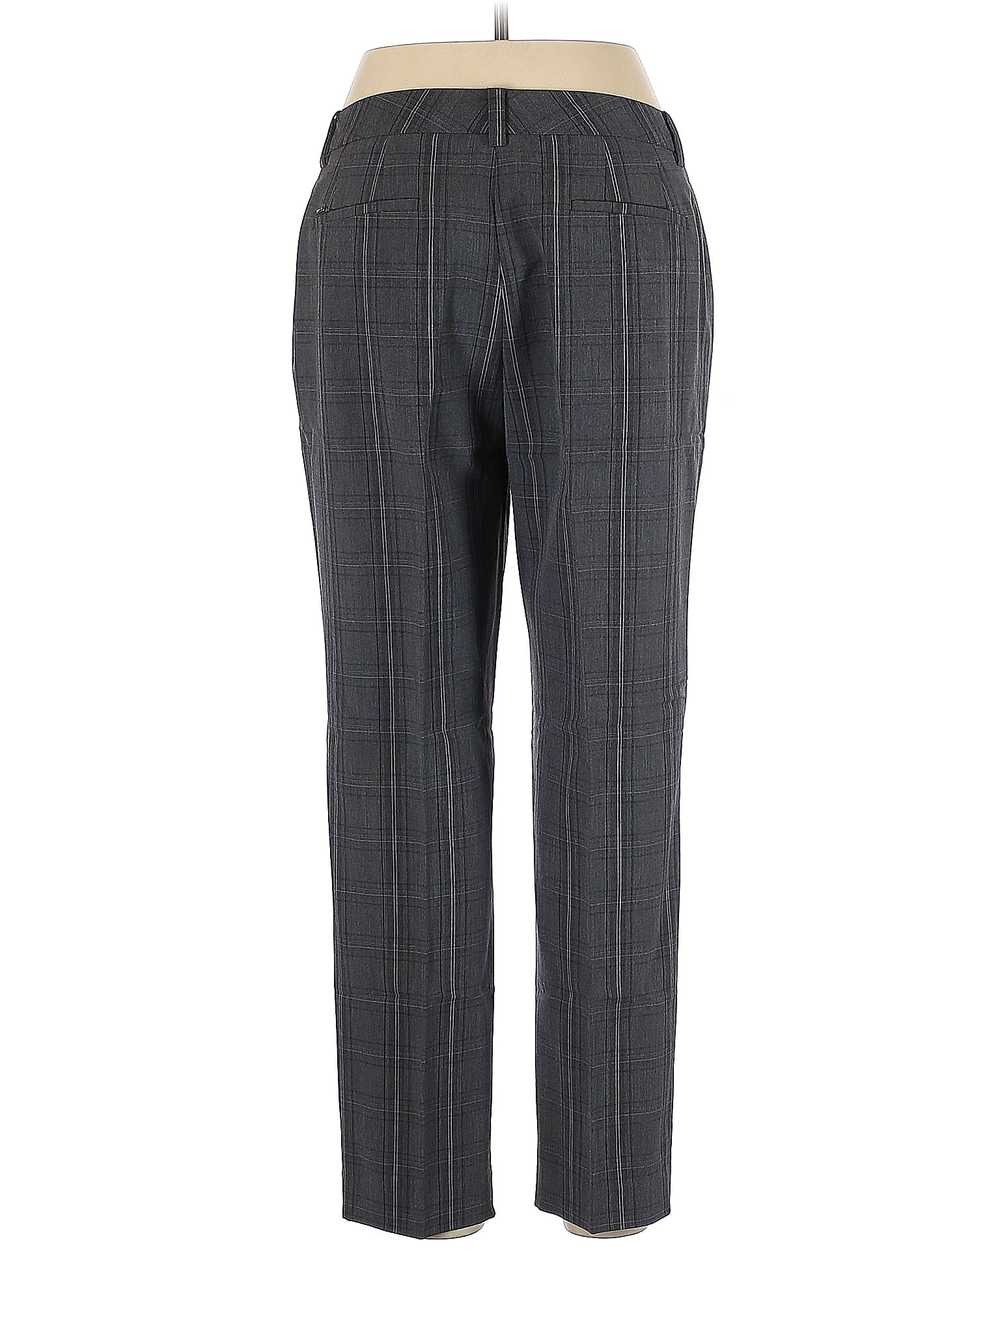 DKNY Women Gray Casual Pants 10 - image 2